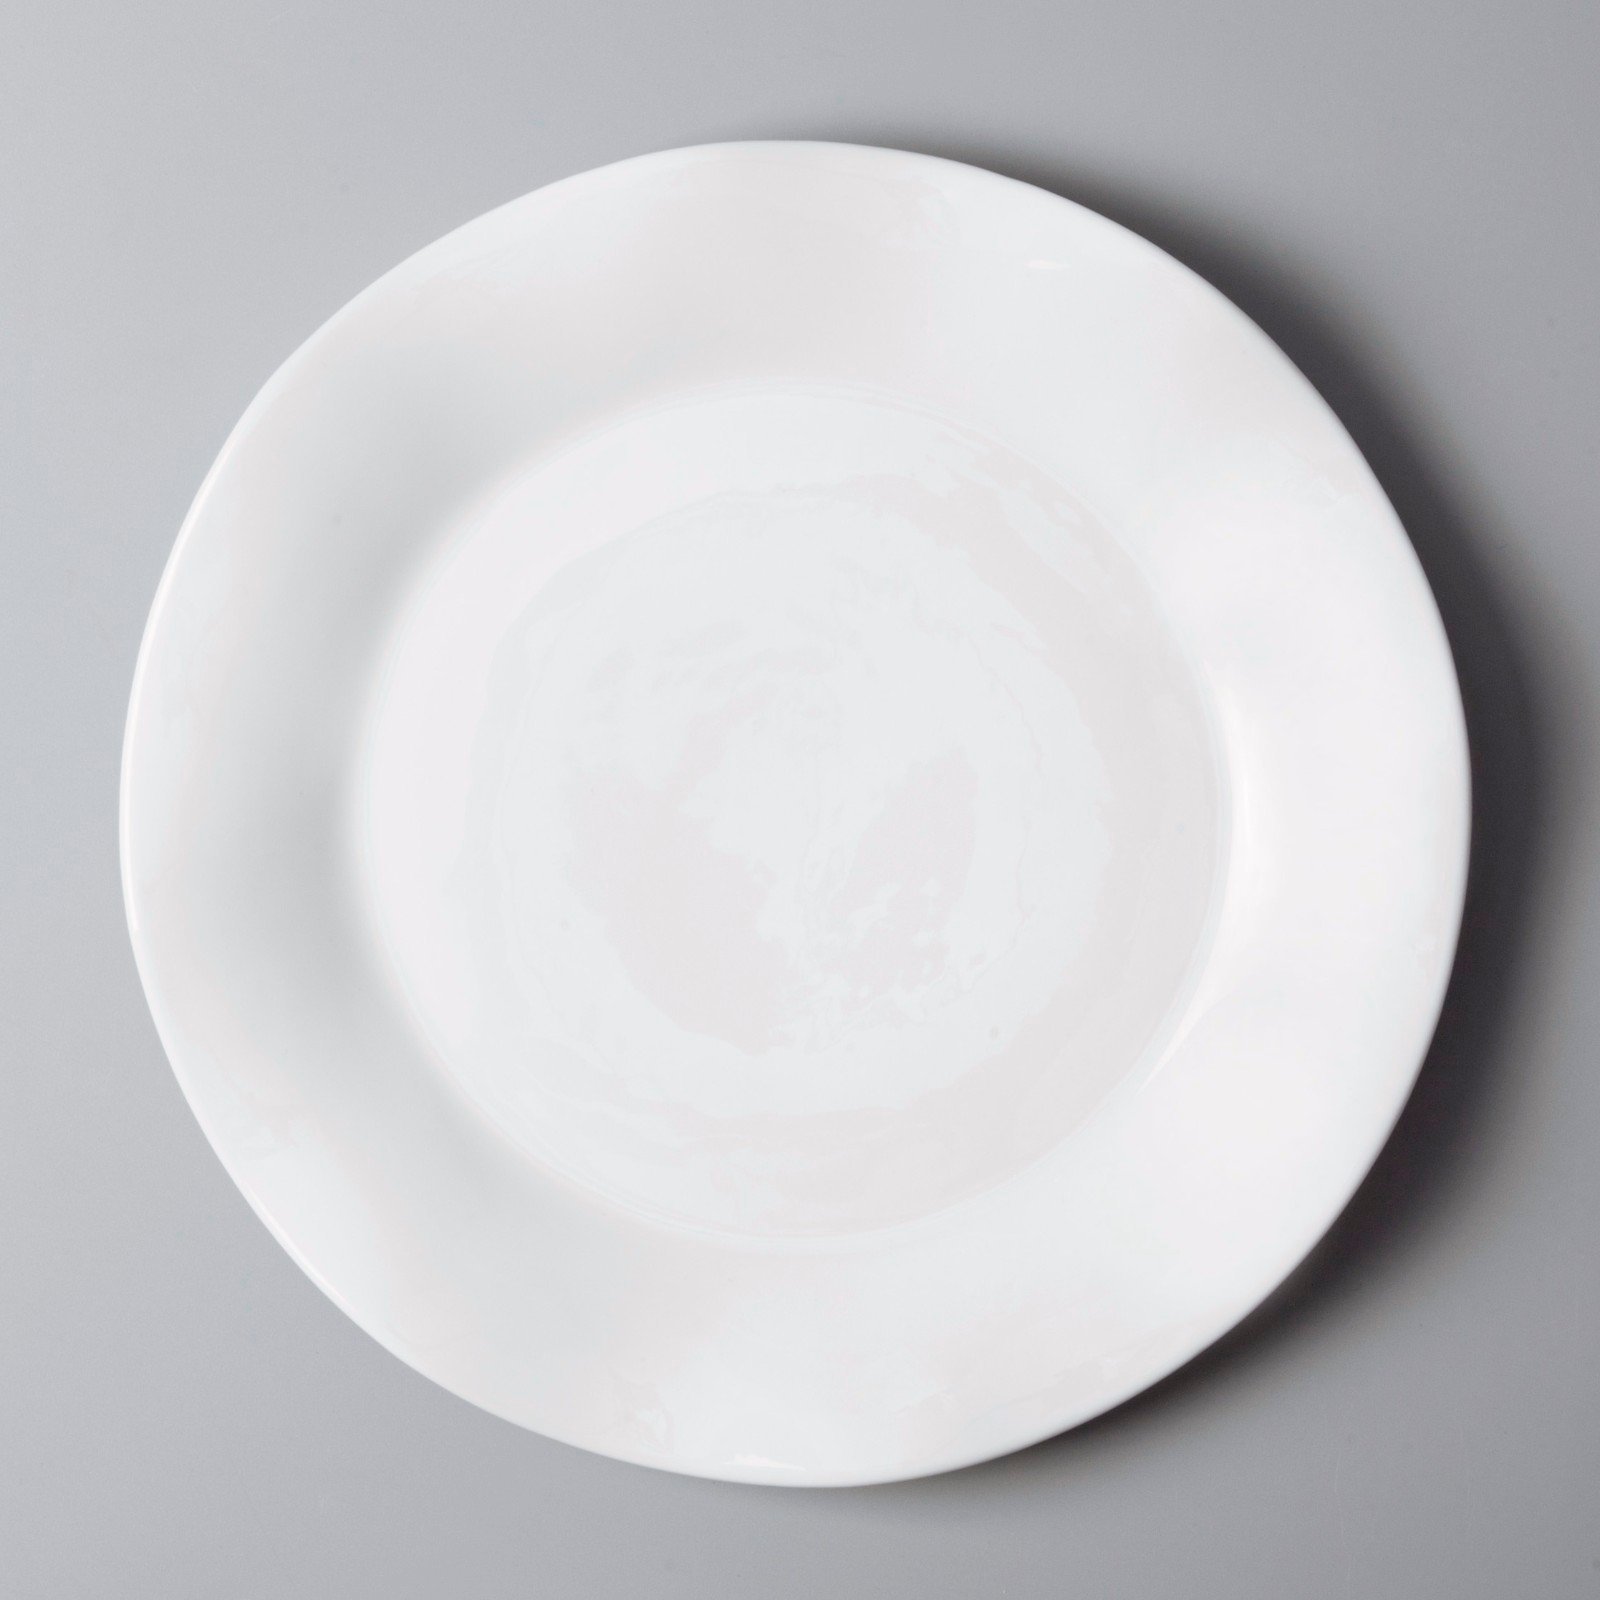 plate white dinner sets Two Eight white porcelain tableware